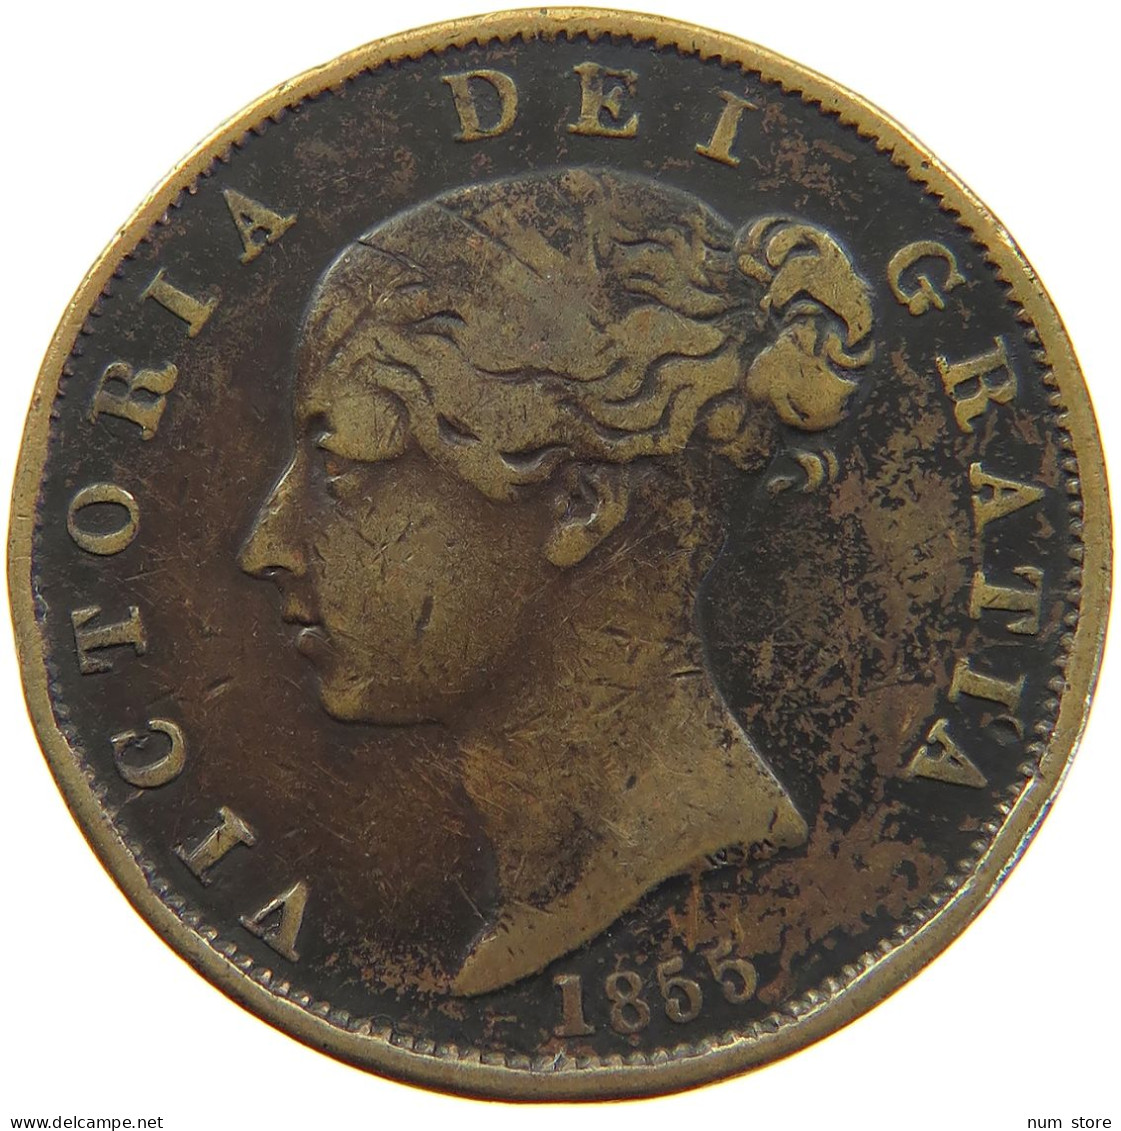 GREAT BRITAIN HALFPENNY 1855 Victoria 1837-1901 #s010 0253 - C. 1/2 Penny